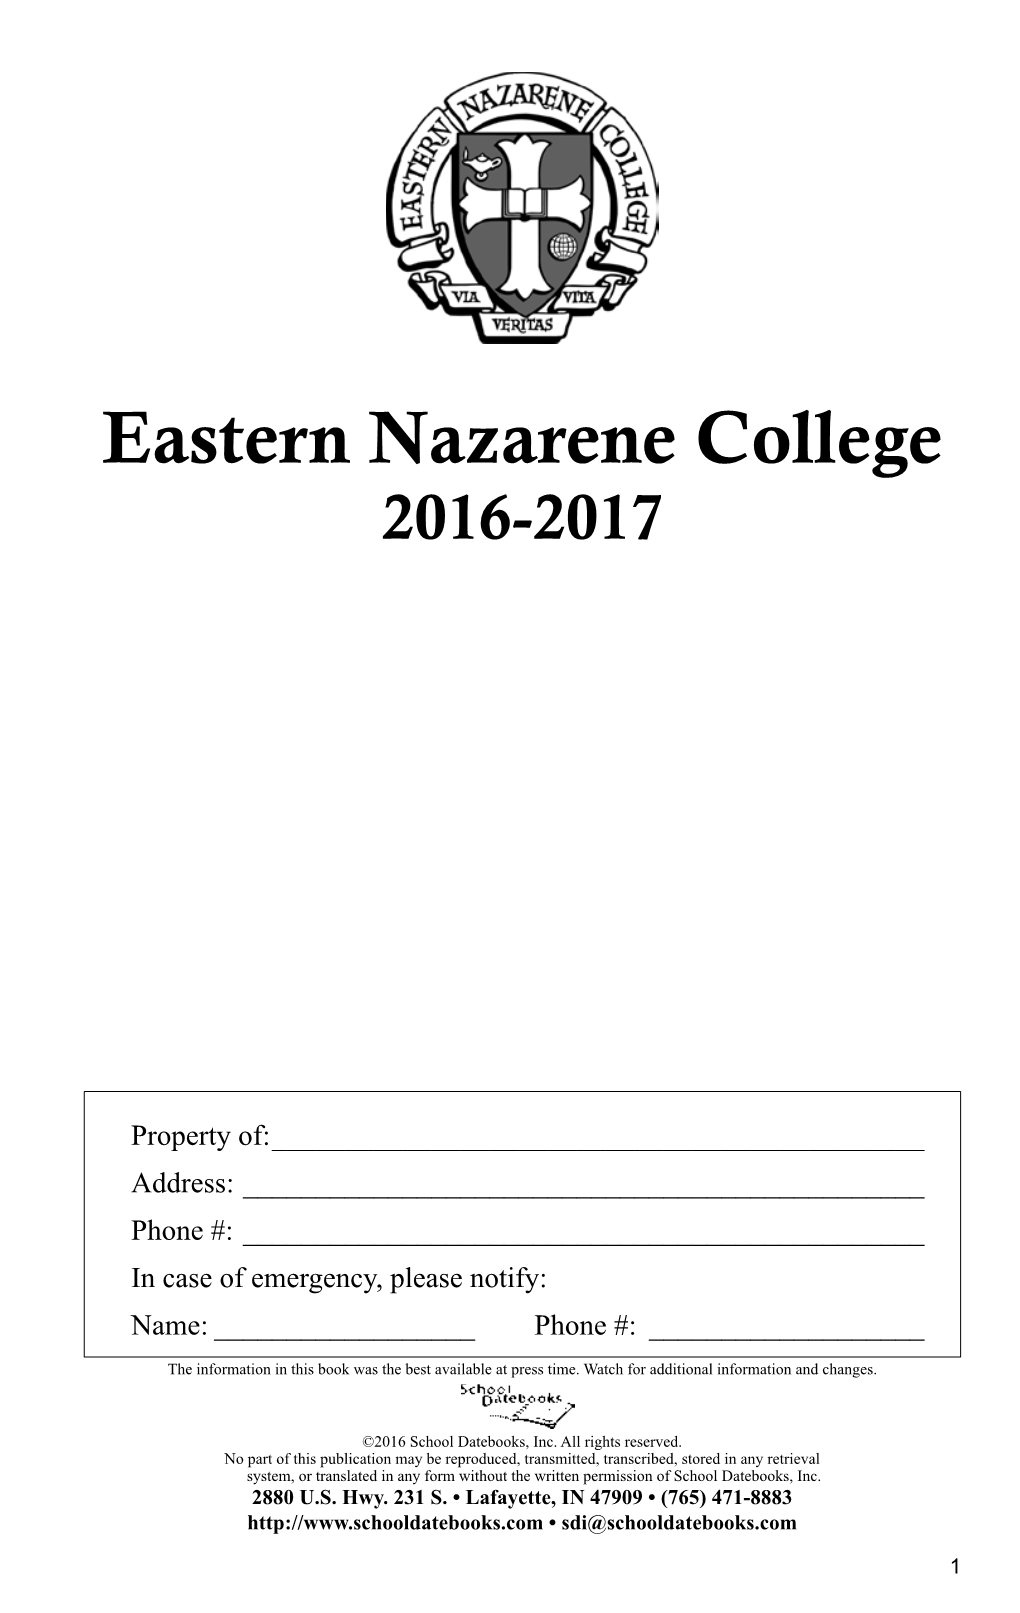 ENC Student Handbook